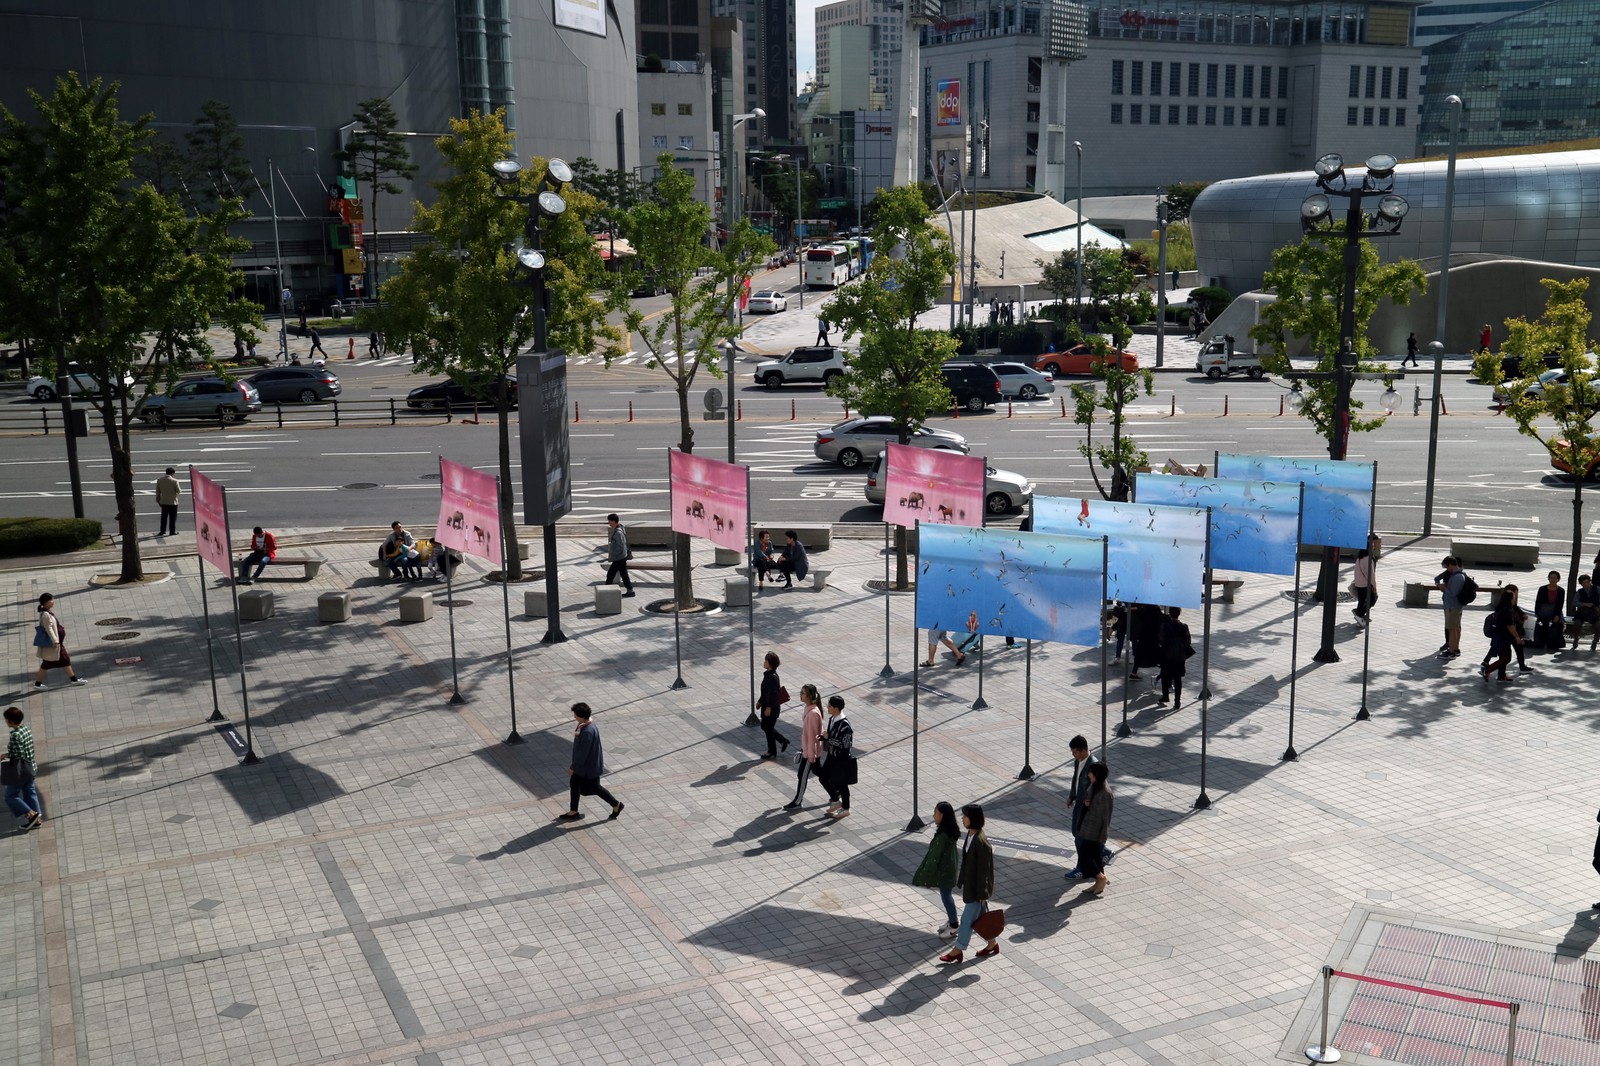 Installation view, BEUTYFOL GIRLS XEROX DESERT ROSE, Doota Plaza, Seoul’s city center, 2018